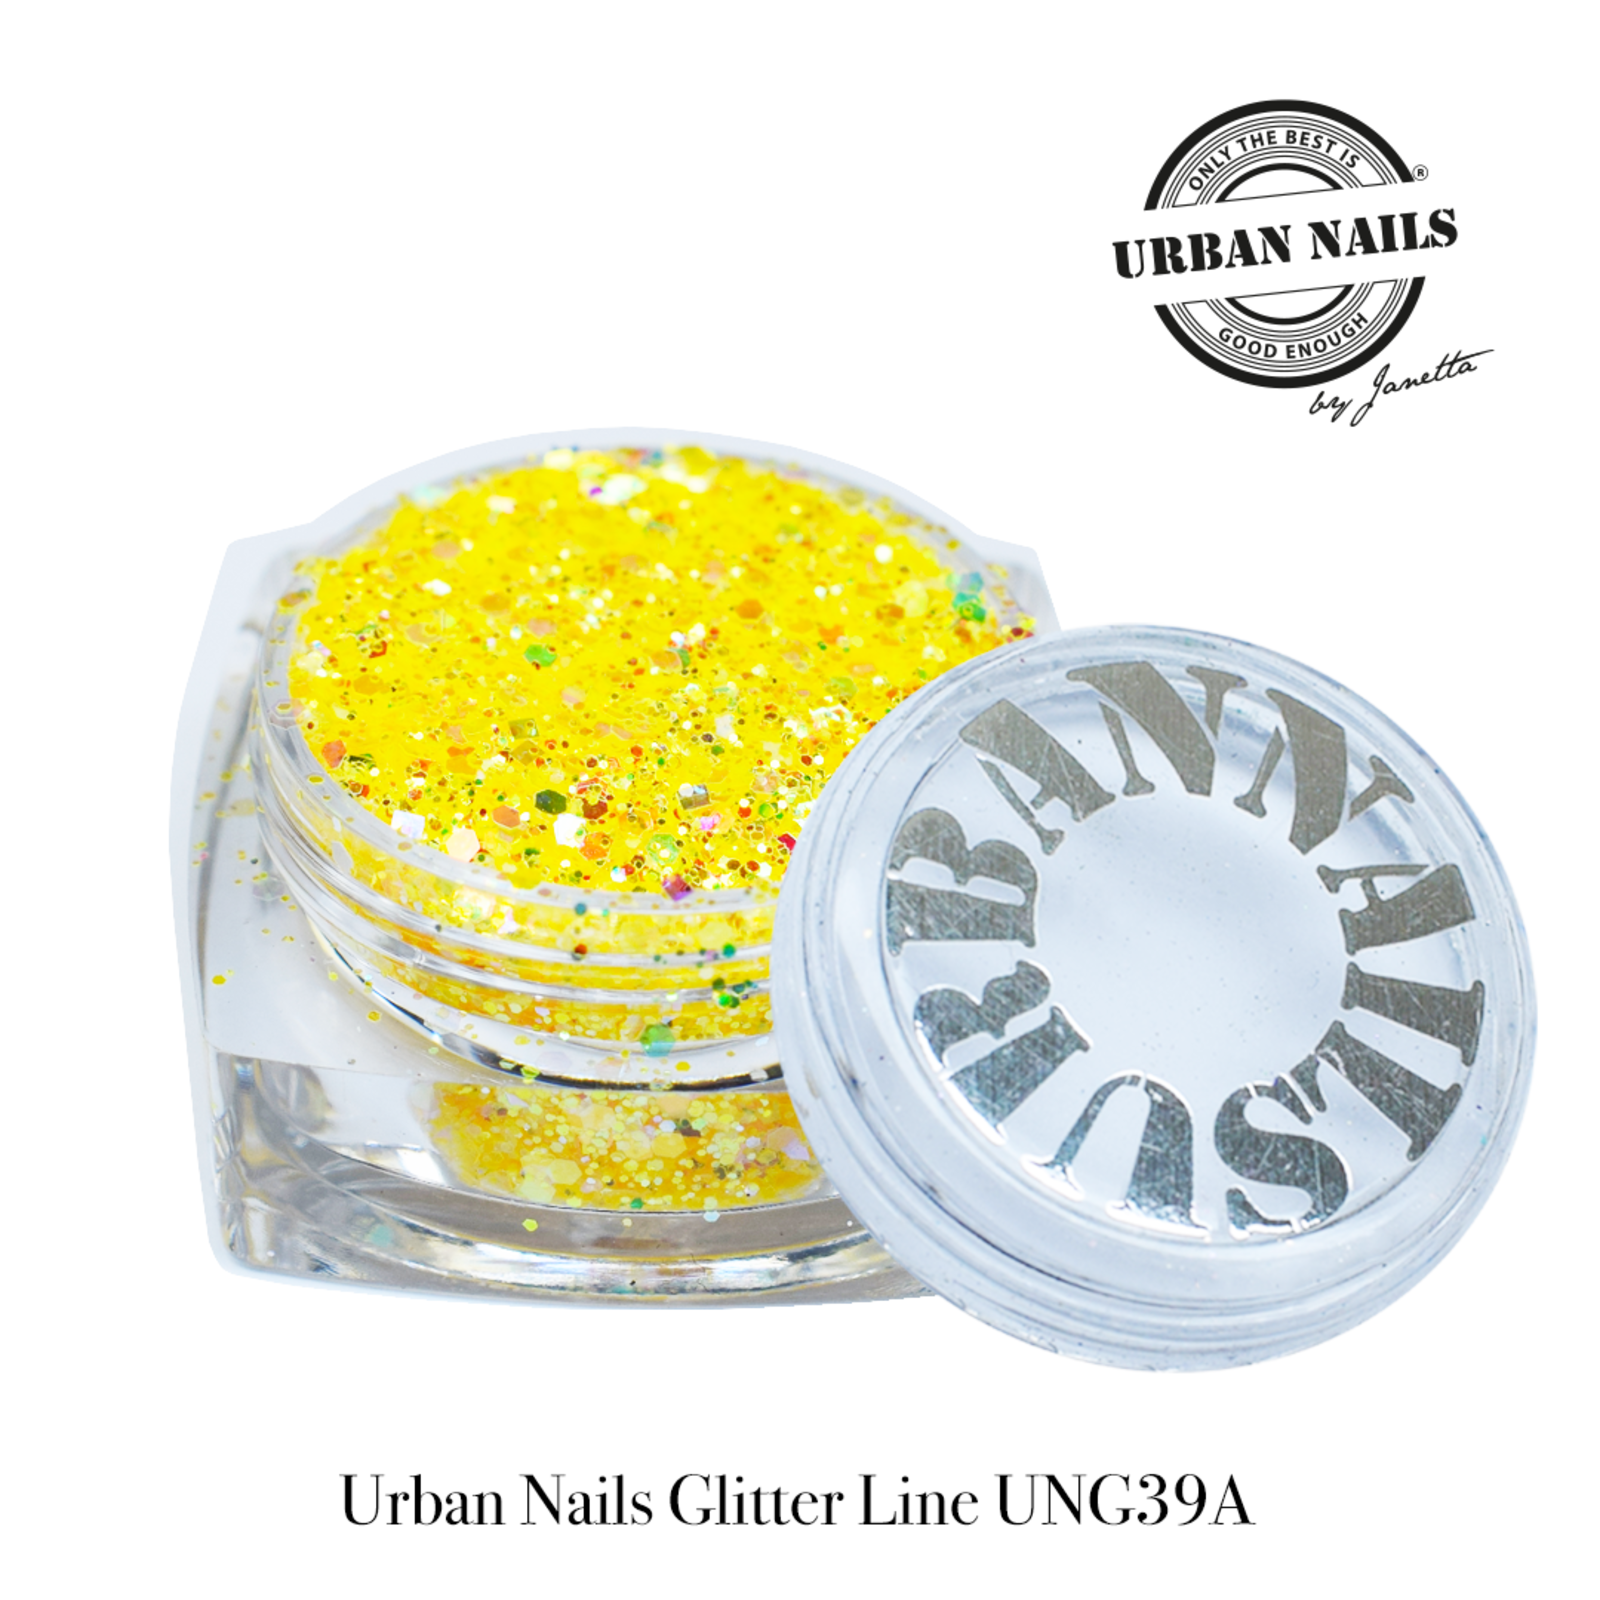 Urban nails Glitter Line UNG39-A